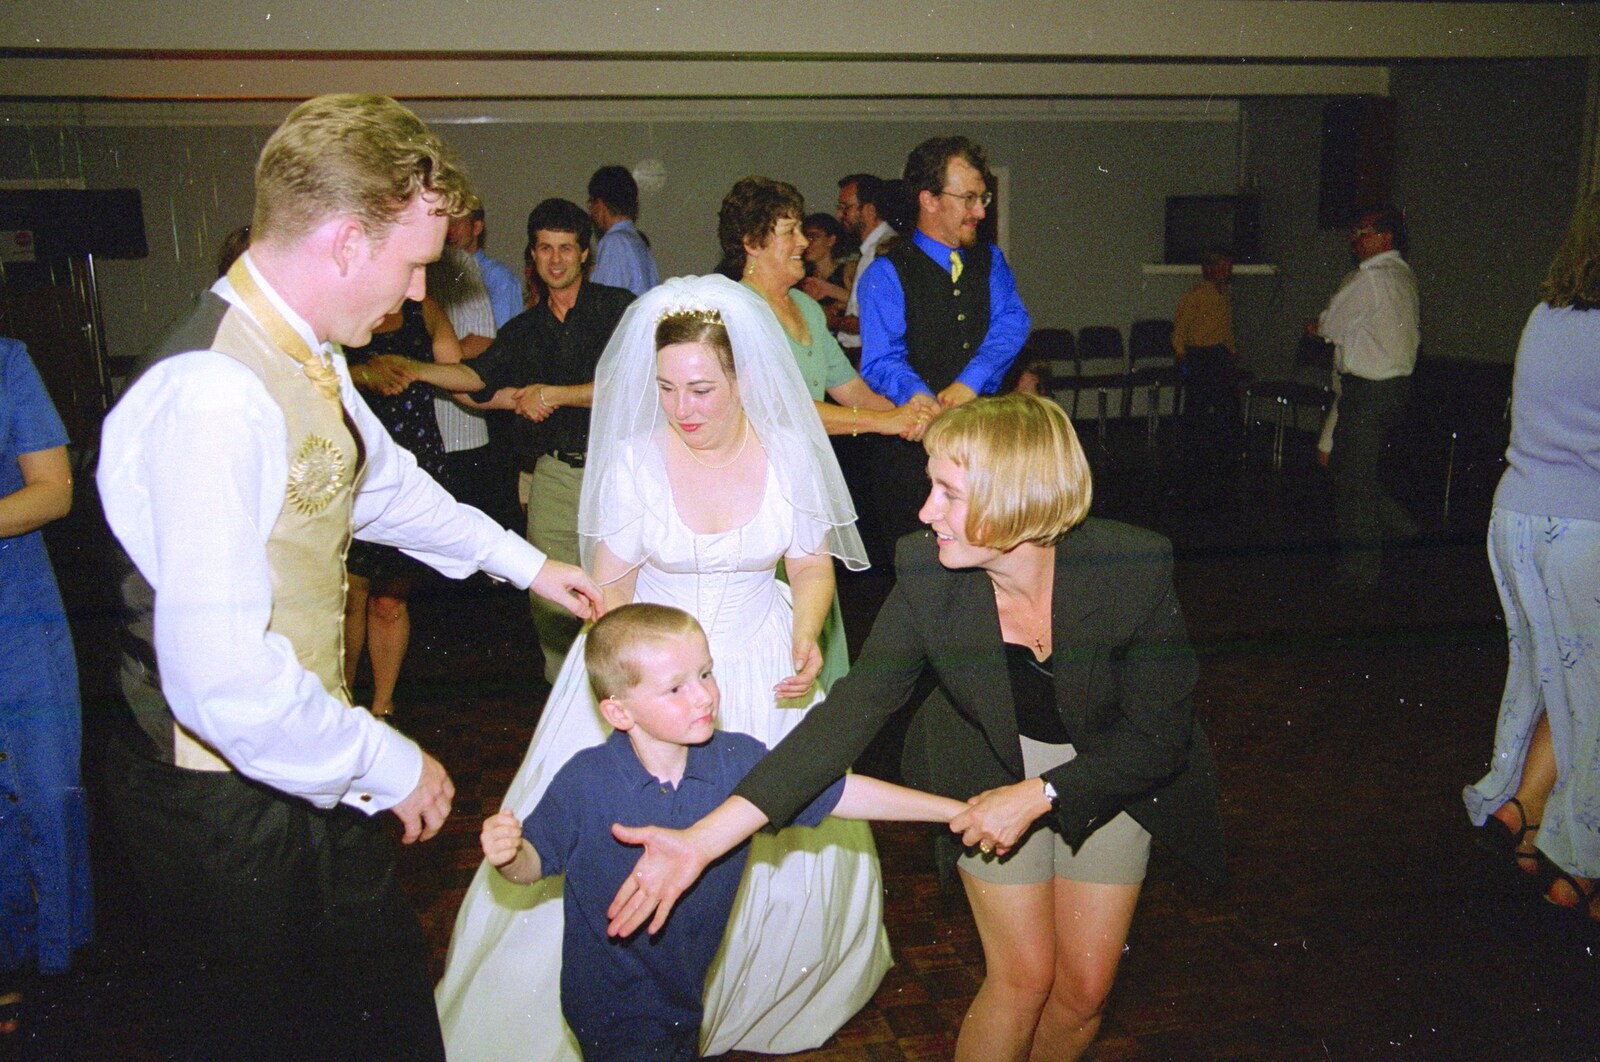 Joe, Lesley and a small dancing guest from Joe and Lesley's CISU Wedding, Ipswich, Suffolk - 30th July 1998